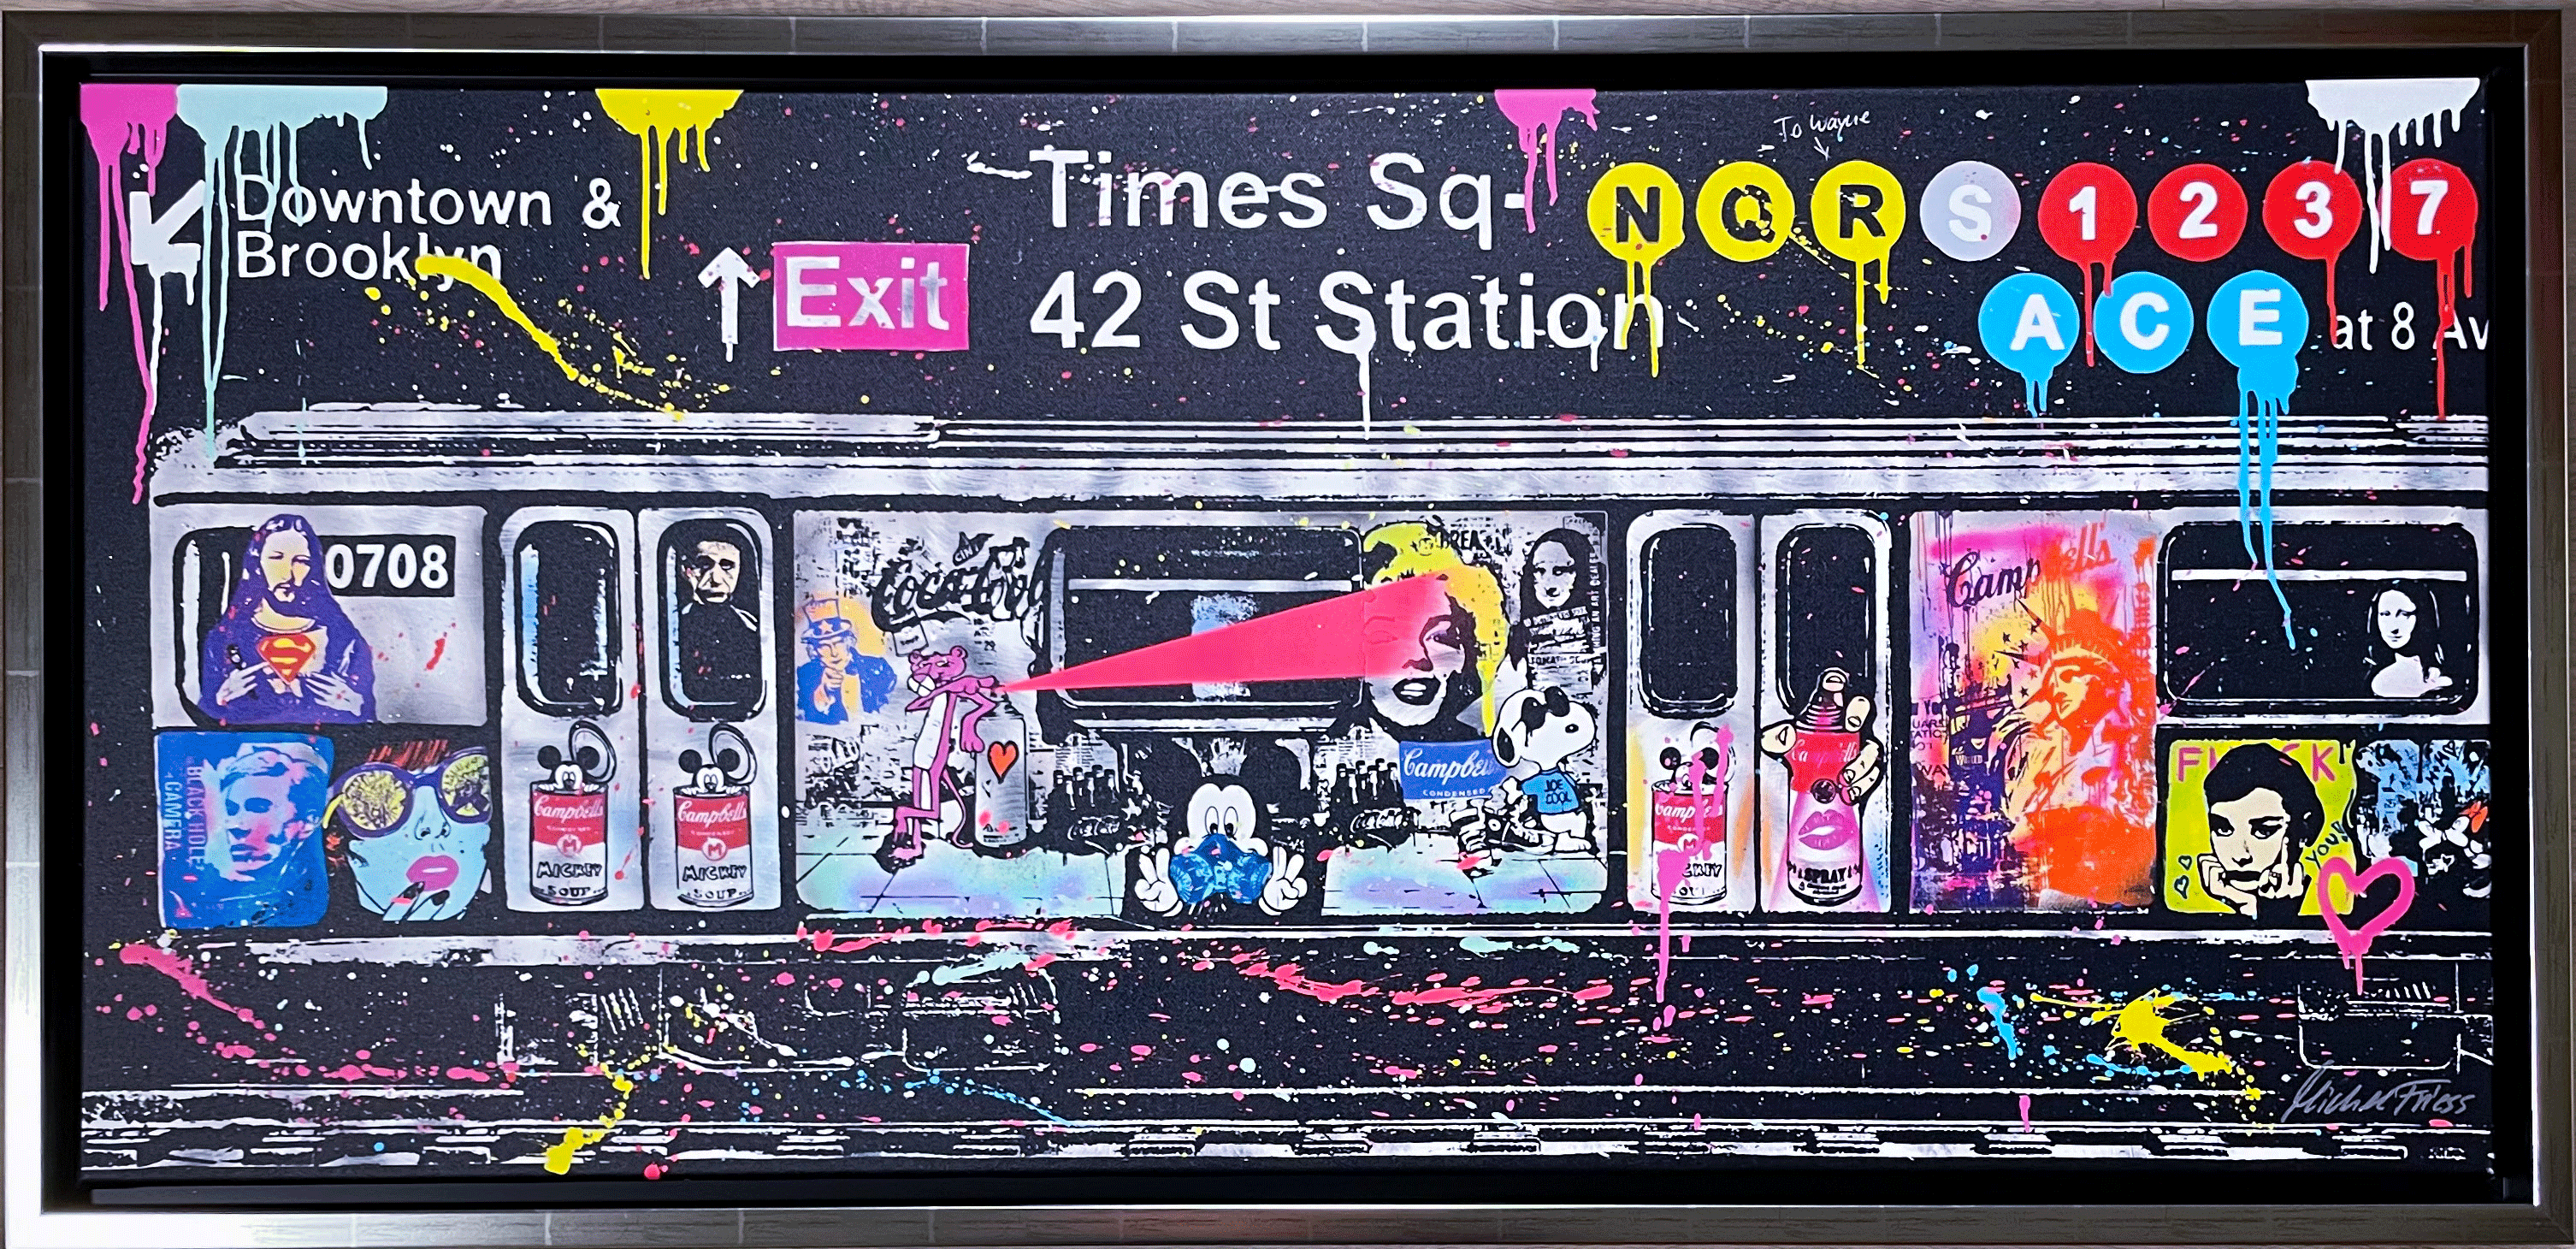 Michel Friess "My New York City Subway"